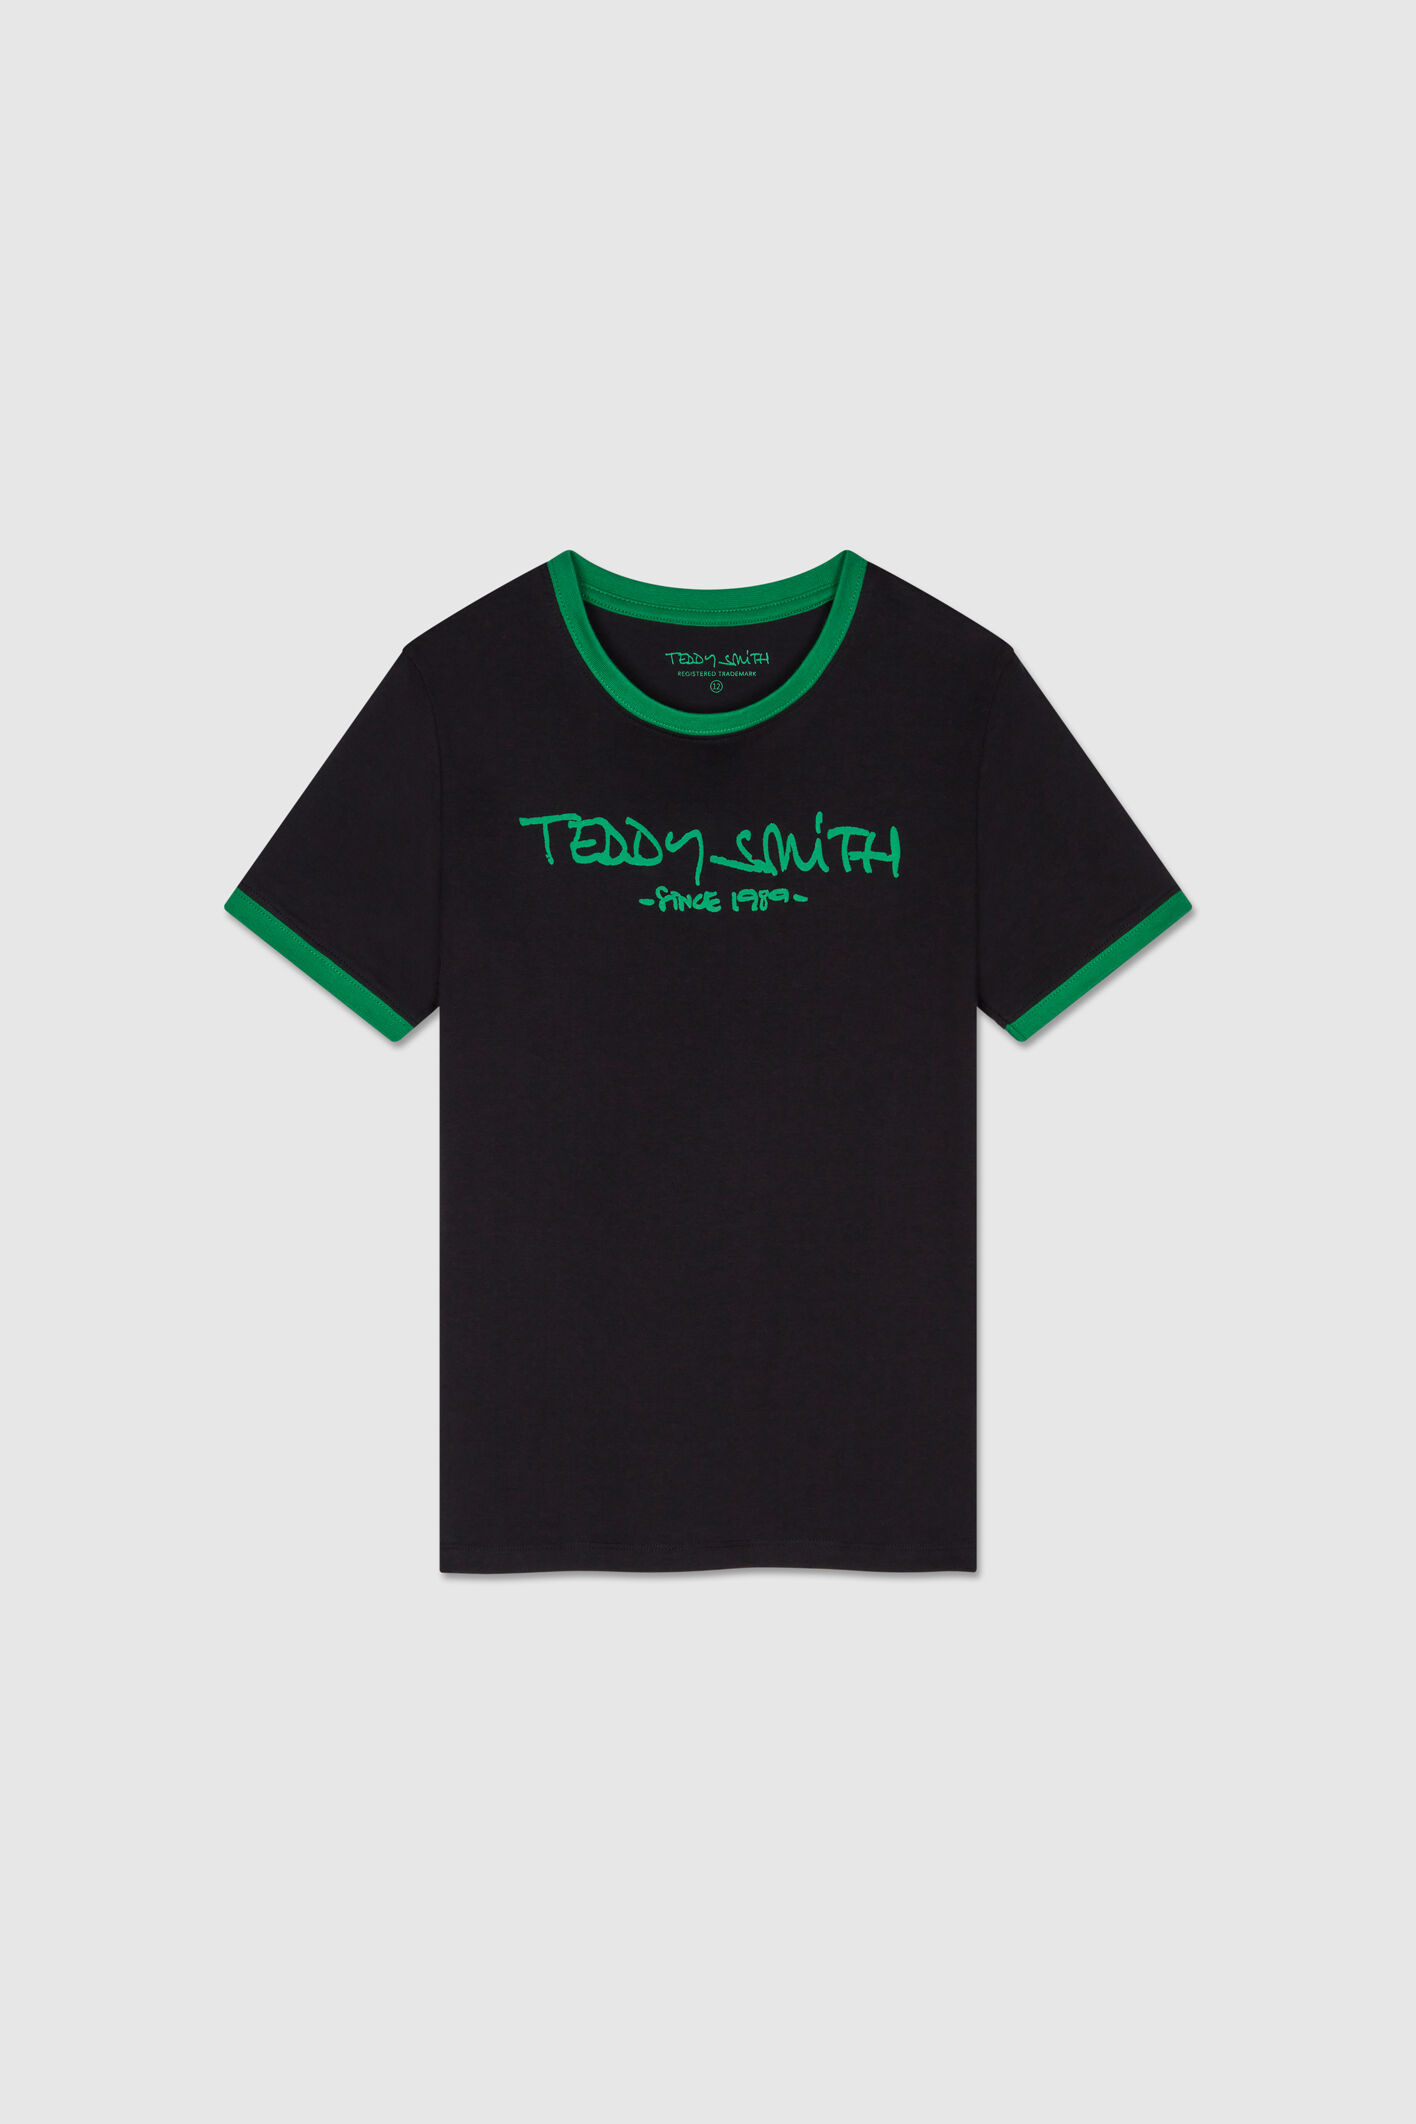 Teddy Smith T-Tess Ml Jr T-Shirt Bambina 